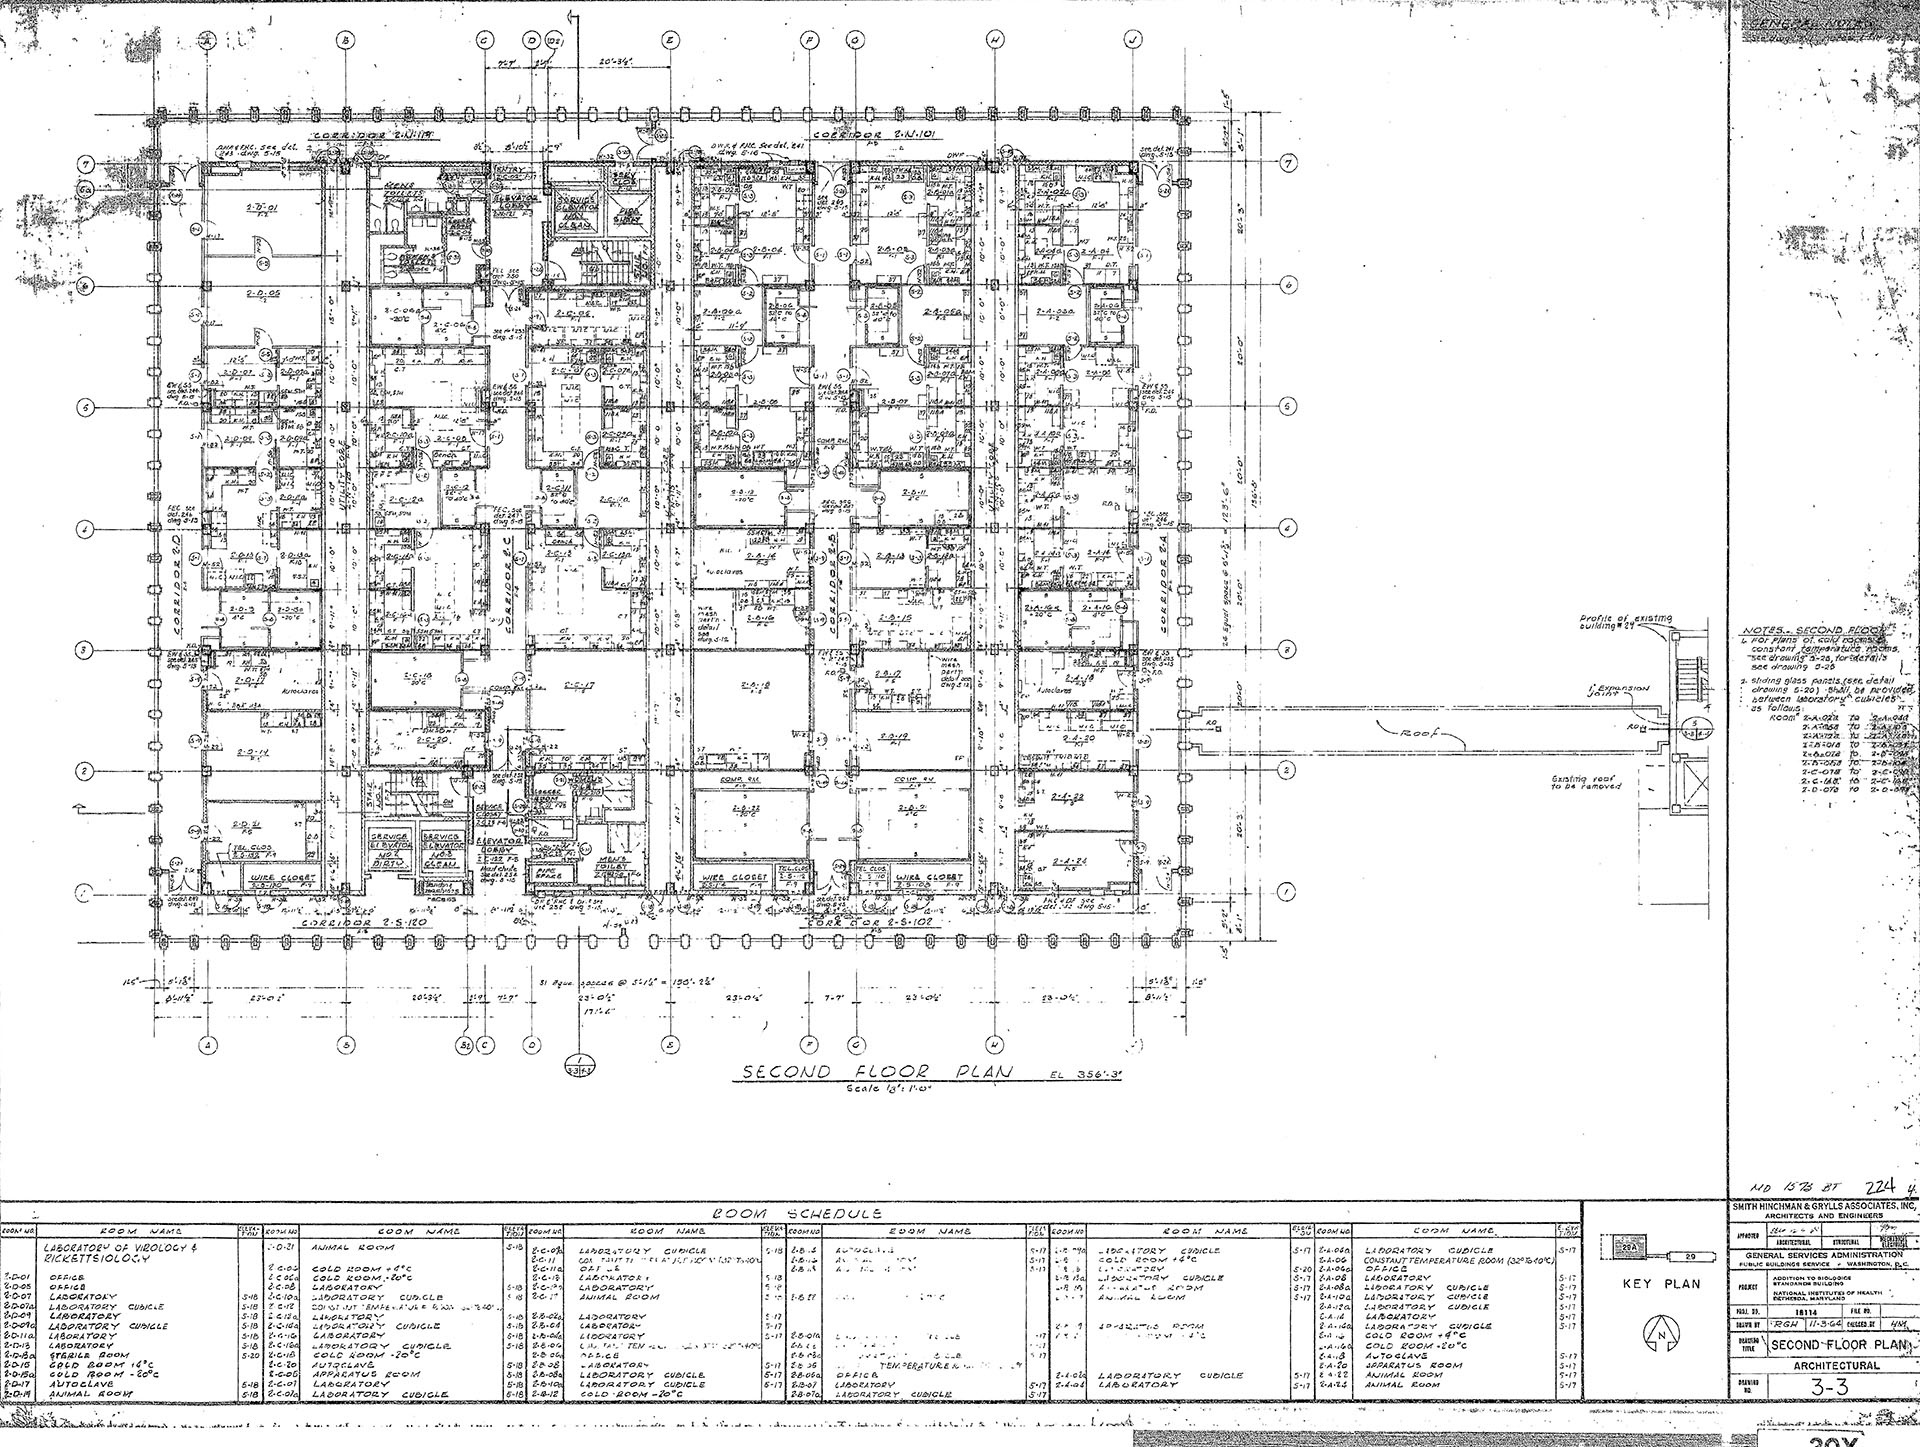 Second floor plan of Building 29A.